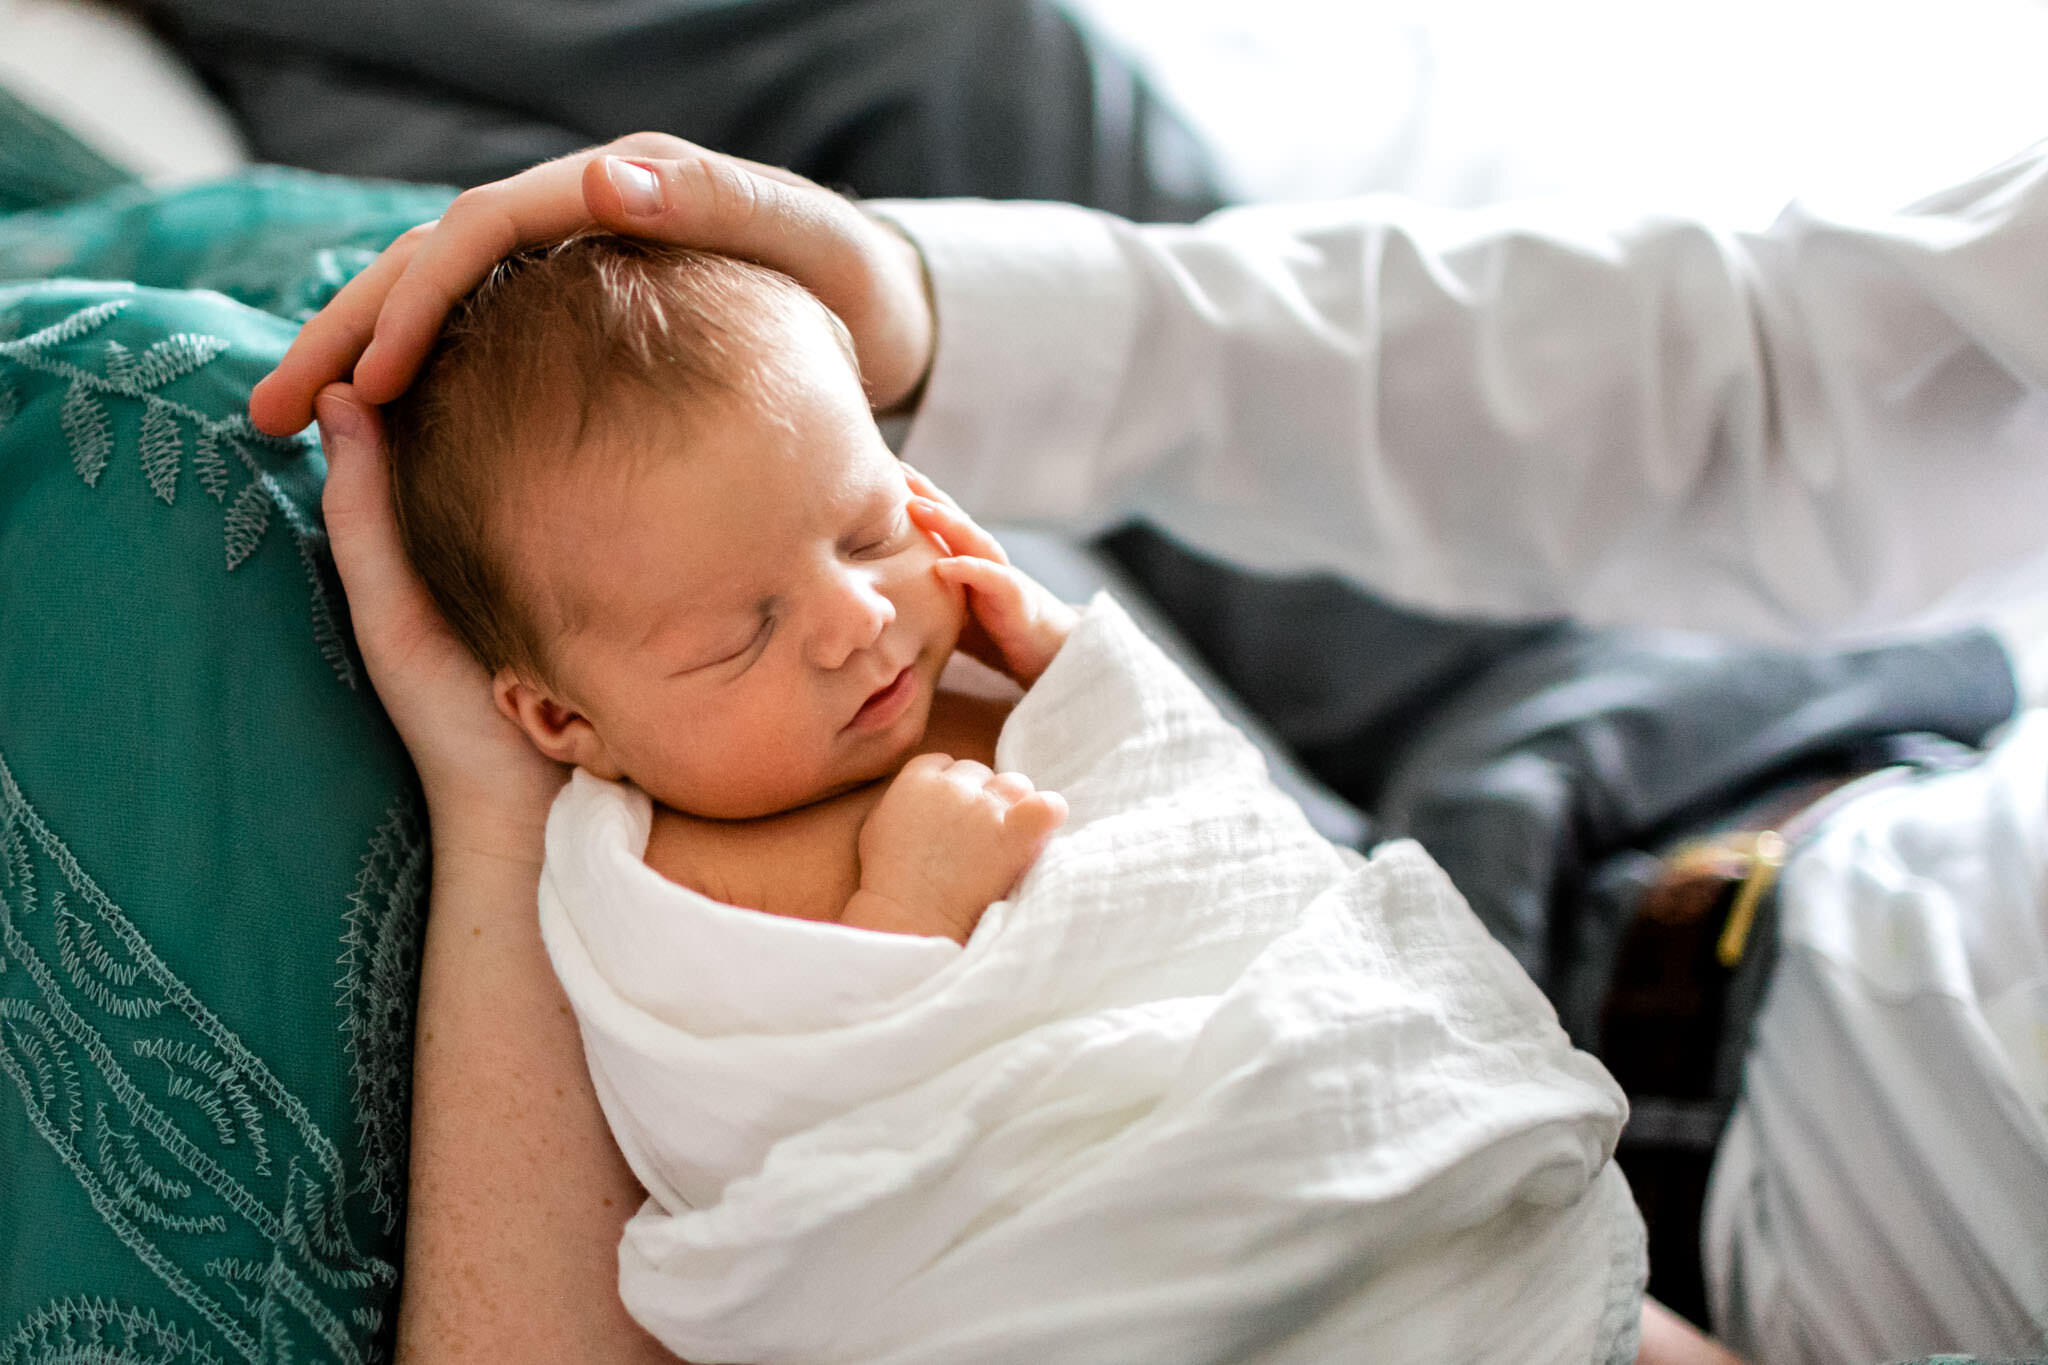 Durham Newborn Photographer | By G. Lin Photography | Baby sleeping